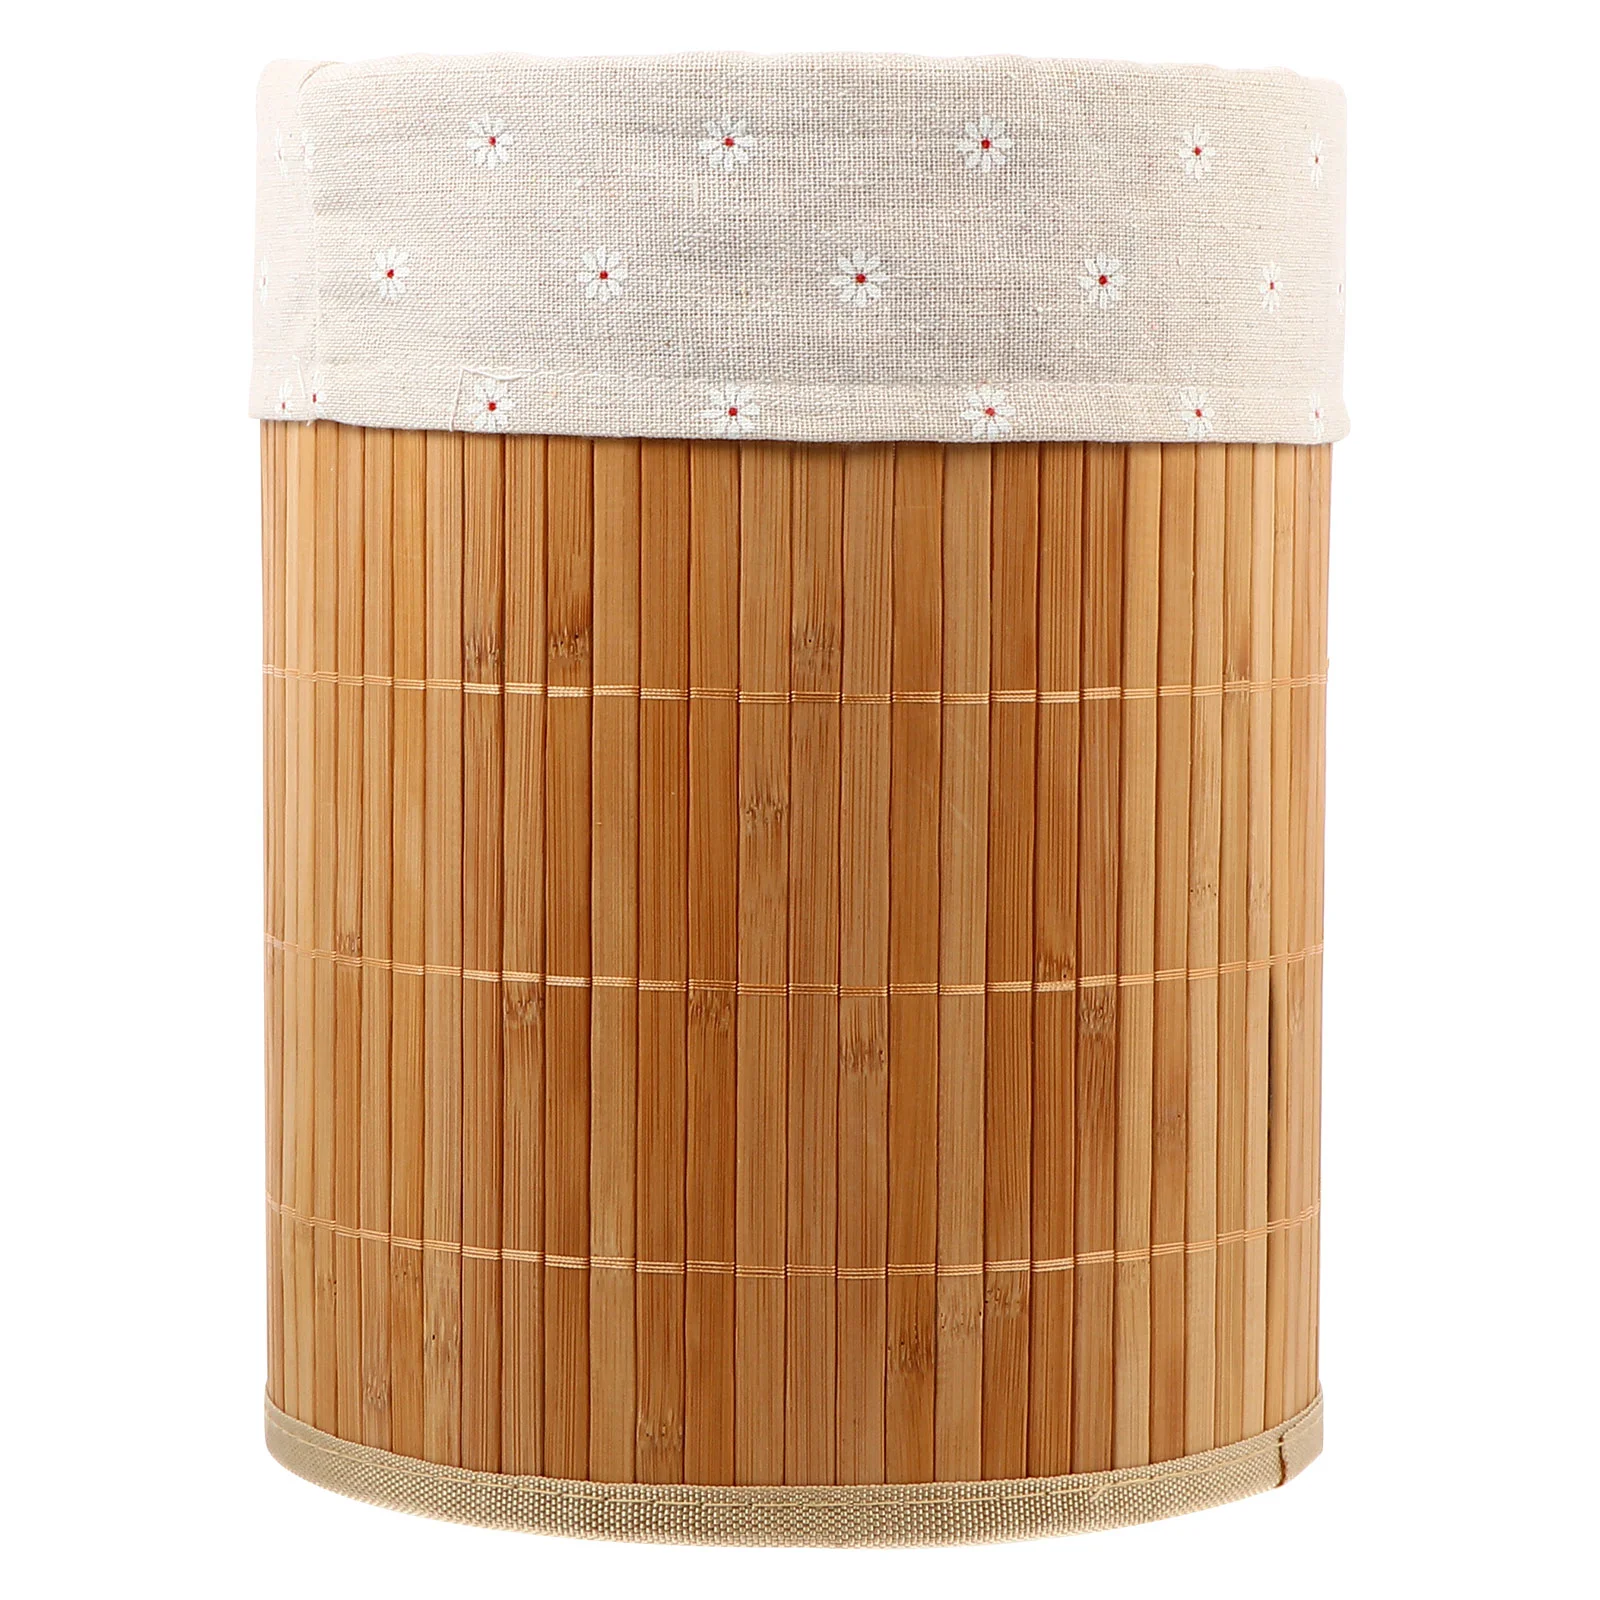 

Basket Storage Baskets Bamboo Woven Laundry Clothes Seagrass Organizer Wicker Bins Bucket Waste Hamper Jute Toy Natural Weaving